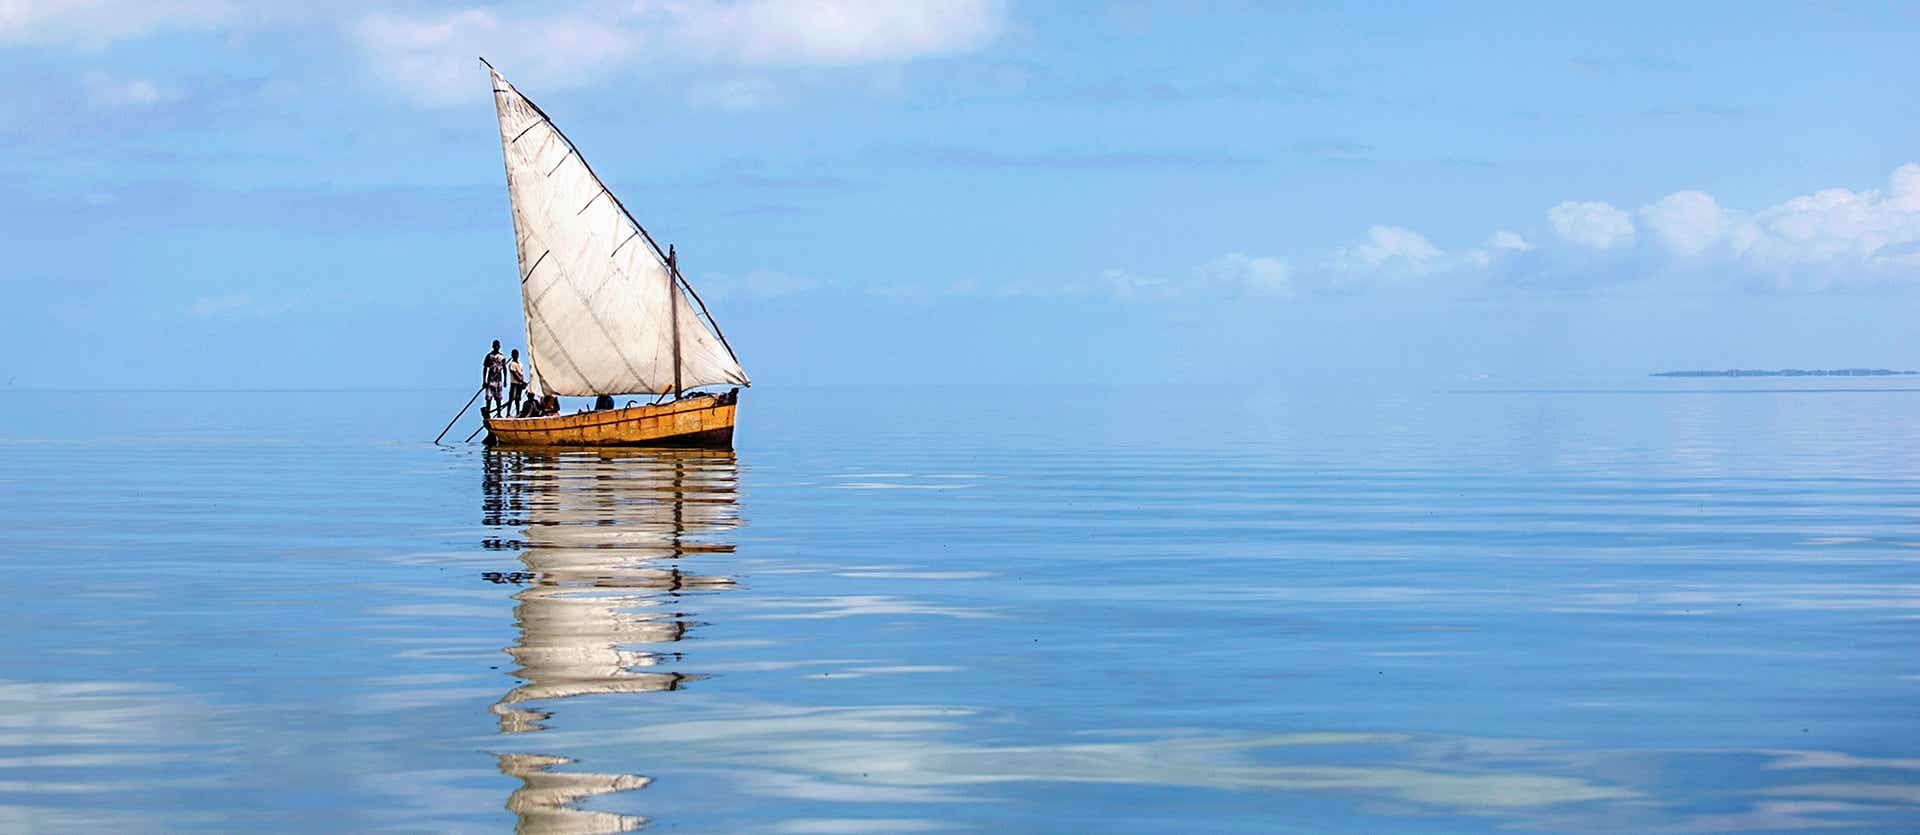 Sailing in Vilankulos <span class="iconos separador"></span> Mozambique